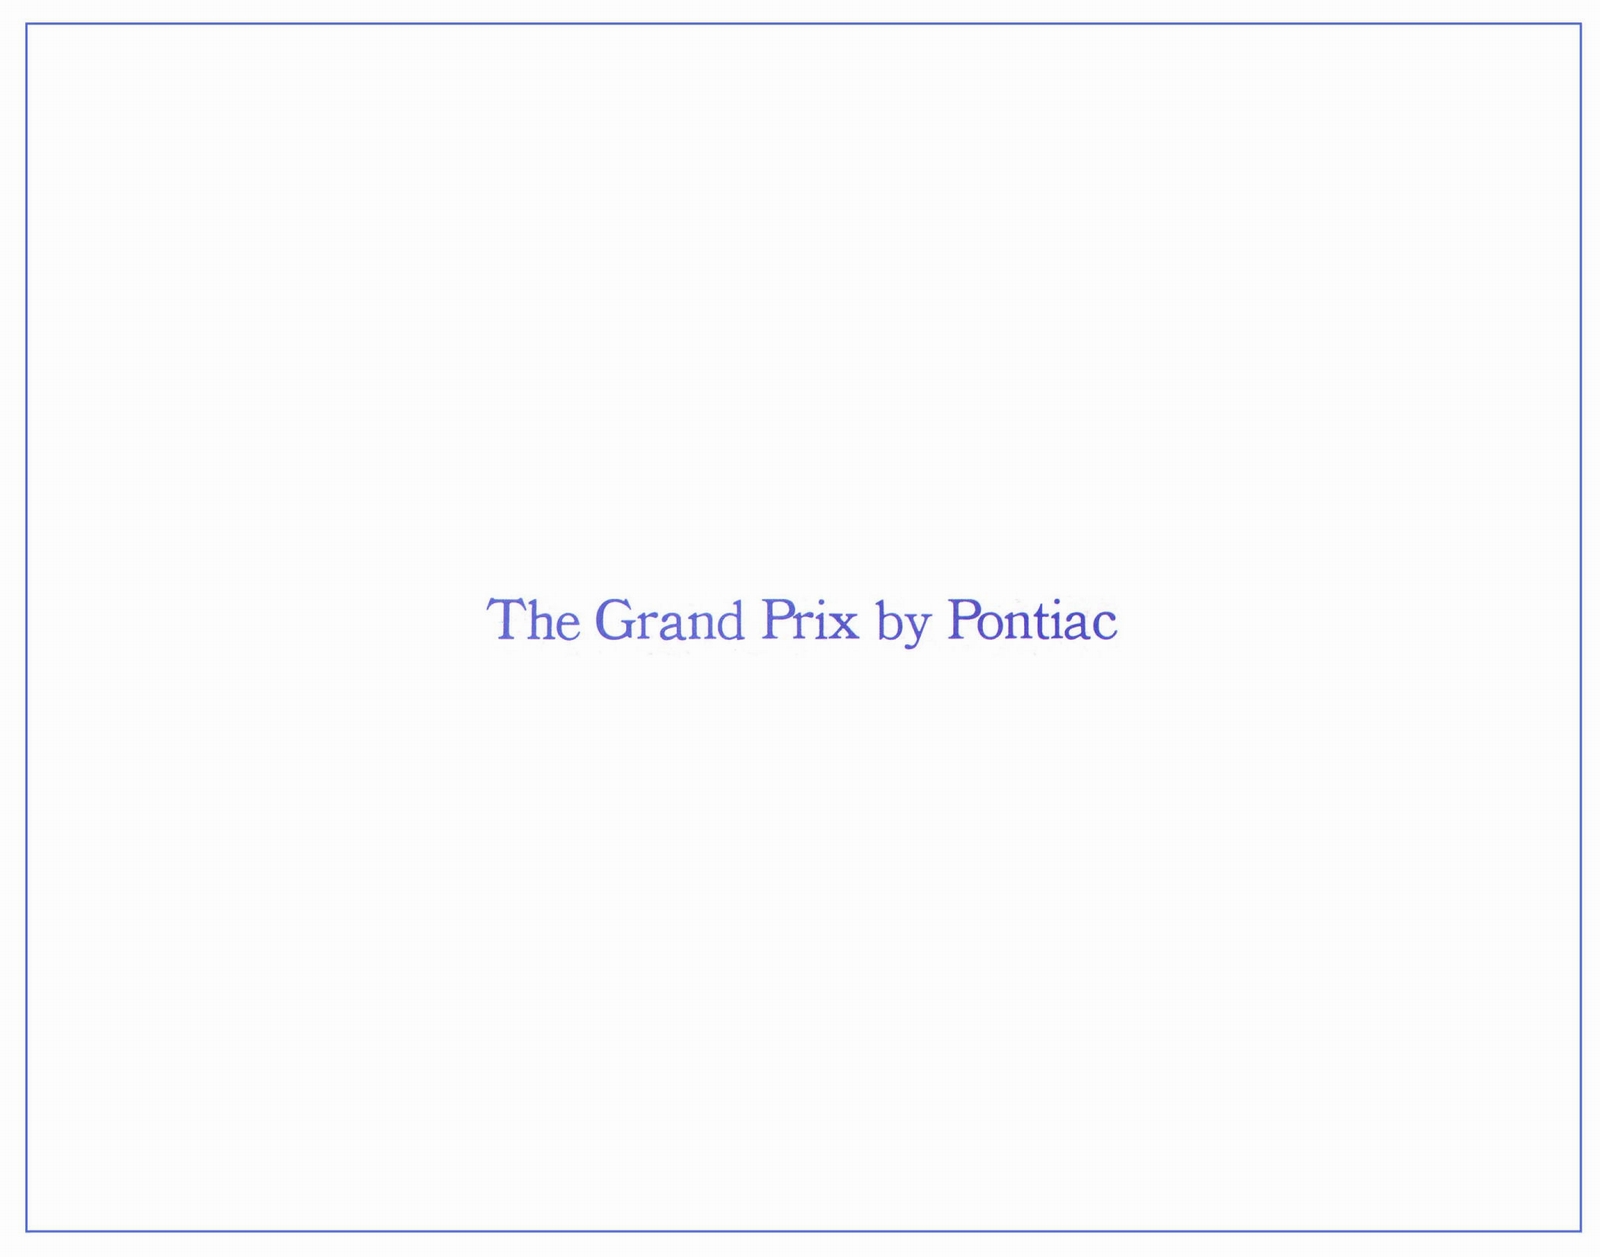 n_1965 Pontiac Grand Prix Folder-01.jpg